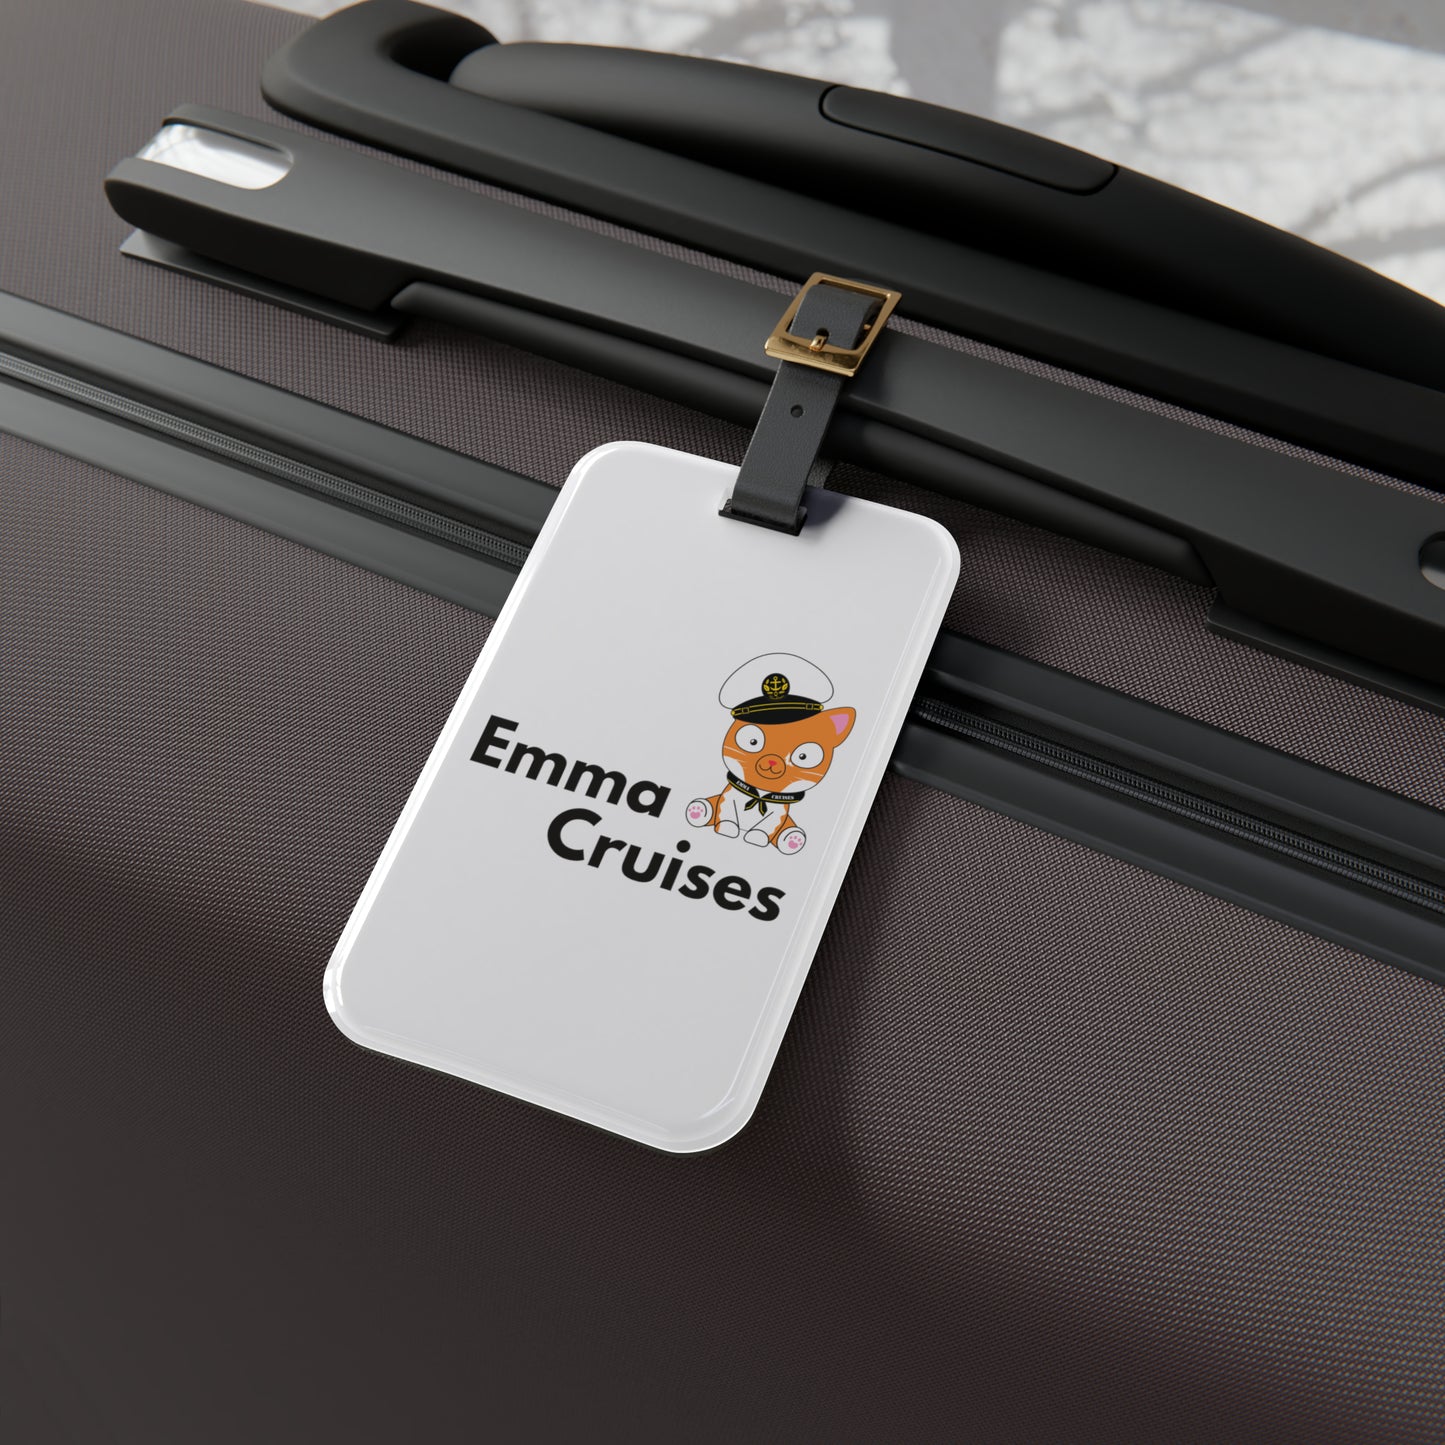 Emma Cruises - Luggage Tag